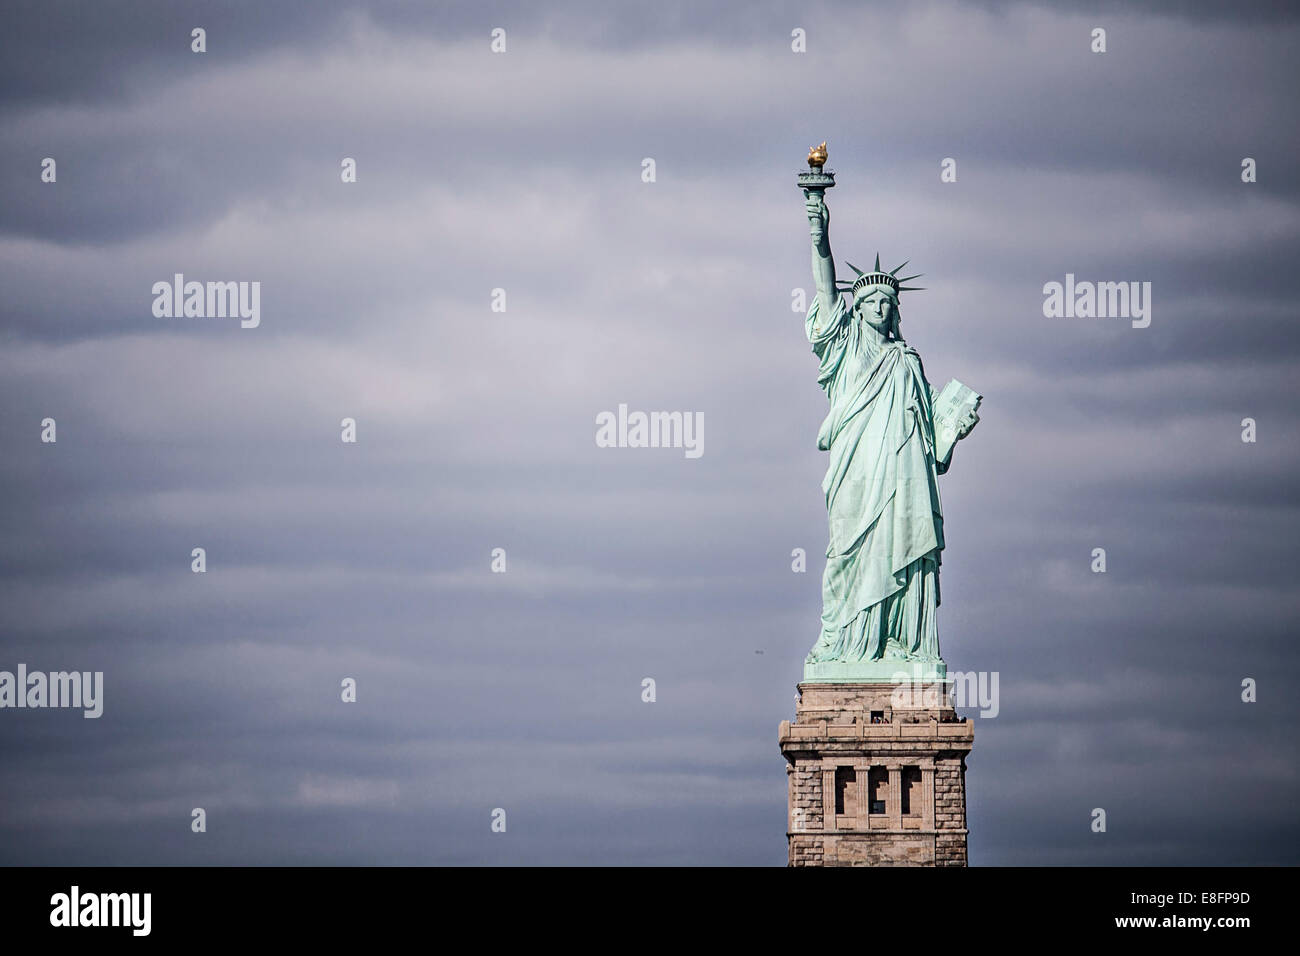 Statue Of Liberty, New York, United States Stock Photo